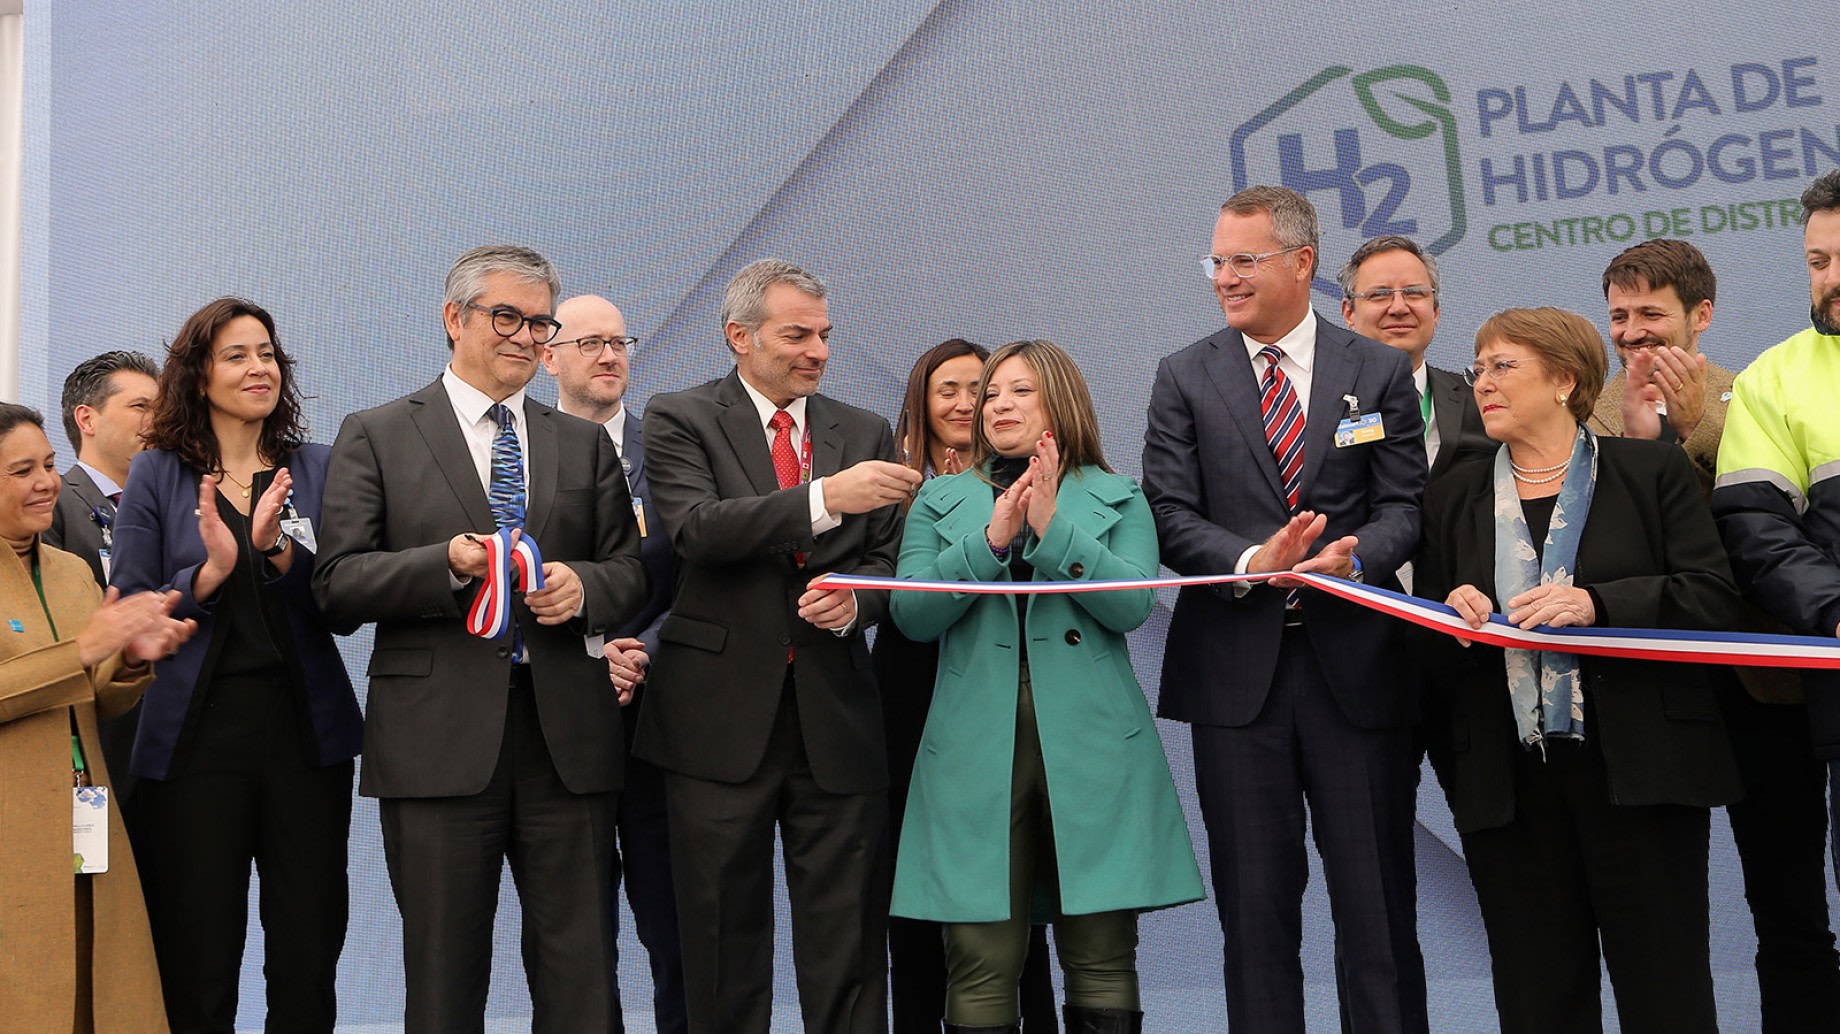 KnowESG_Walmart's First Green Hydrogen Plant in Latin America